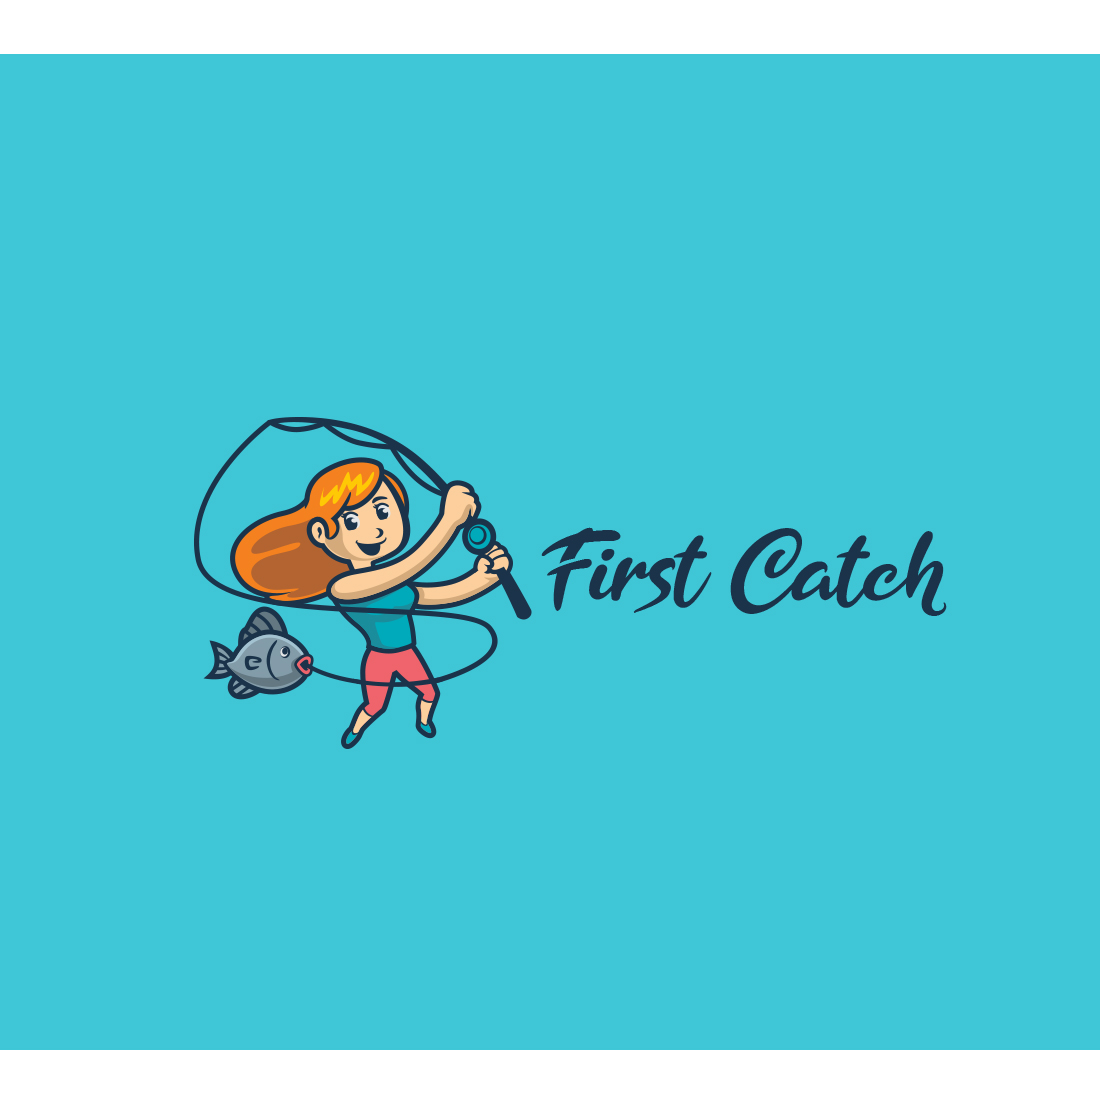 Angler Girl Character Masccot Logo cover image.